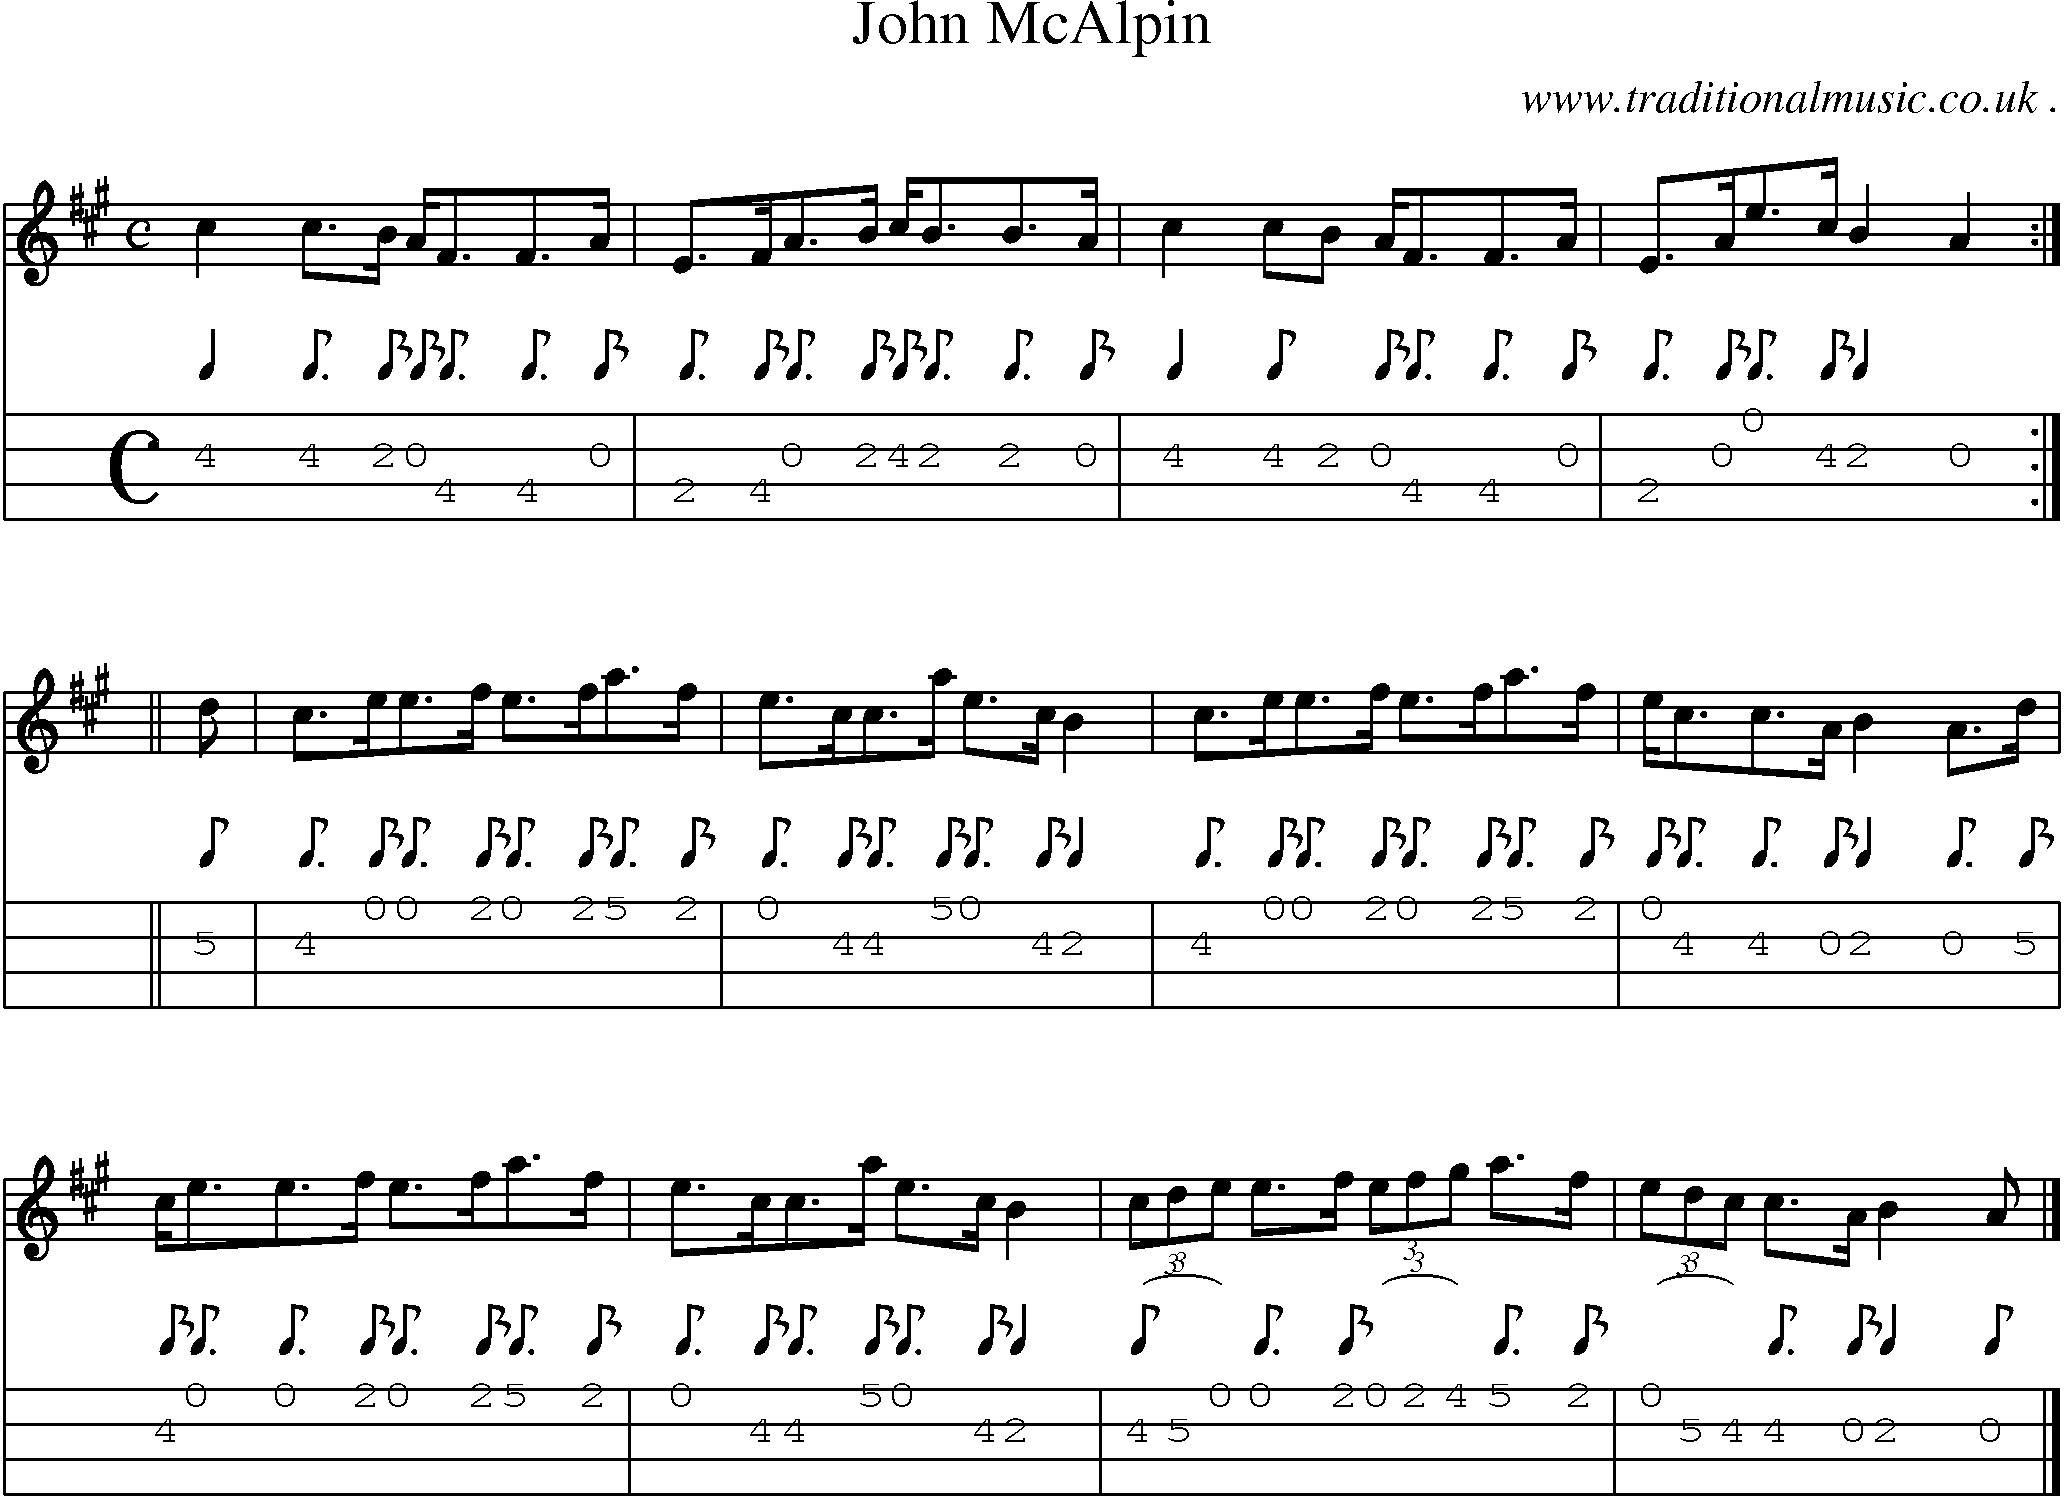 Sheet-music  score, Chords and Mandolin Tabs for John Mcalpin